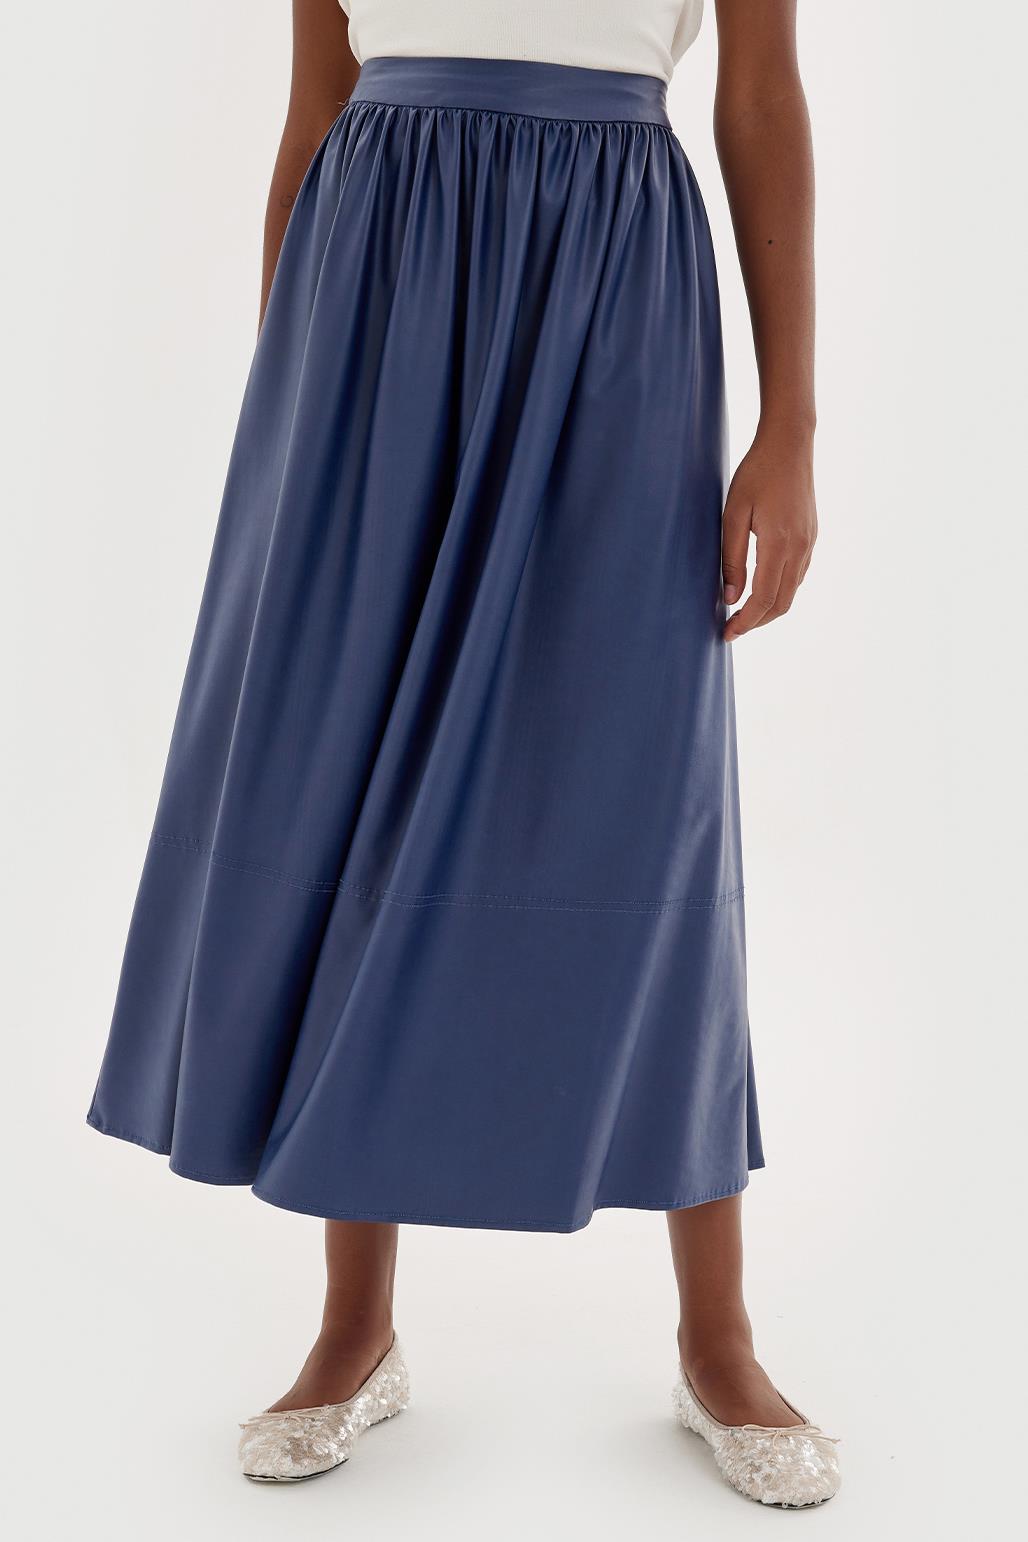 Shirred Soft Leather Skirt Navy Blue